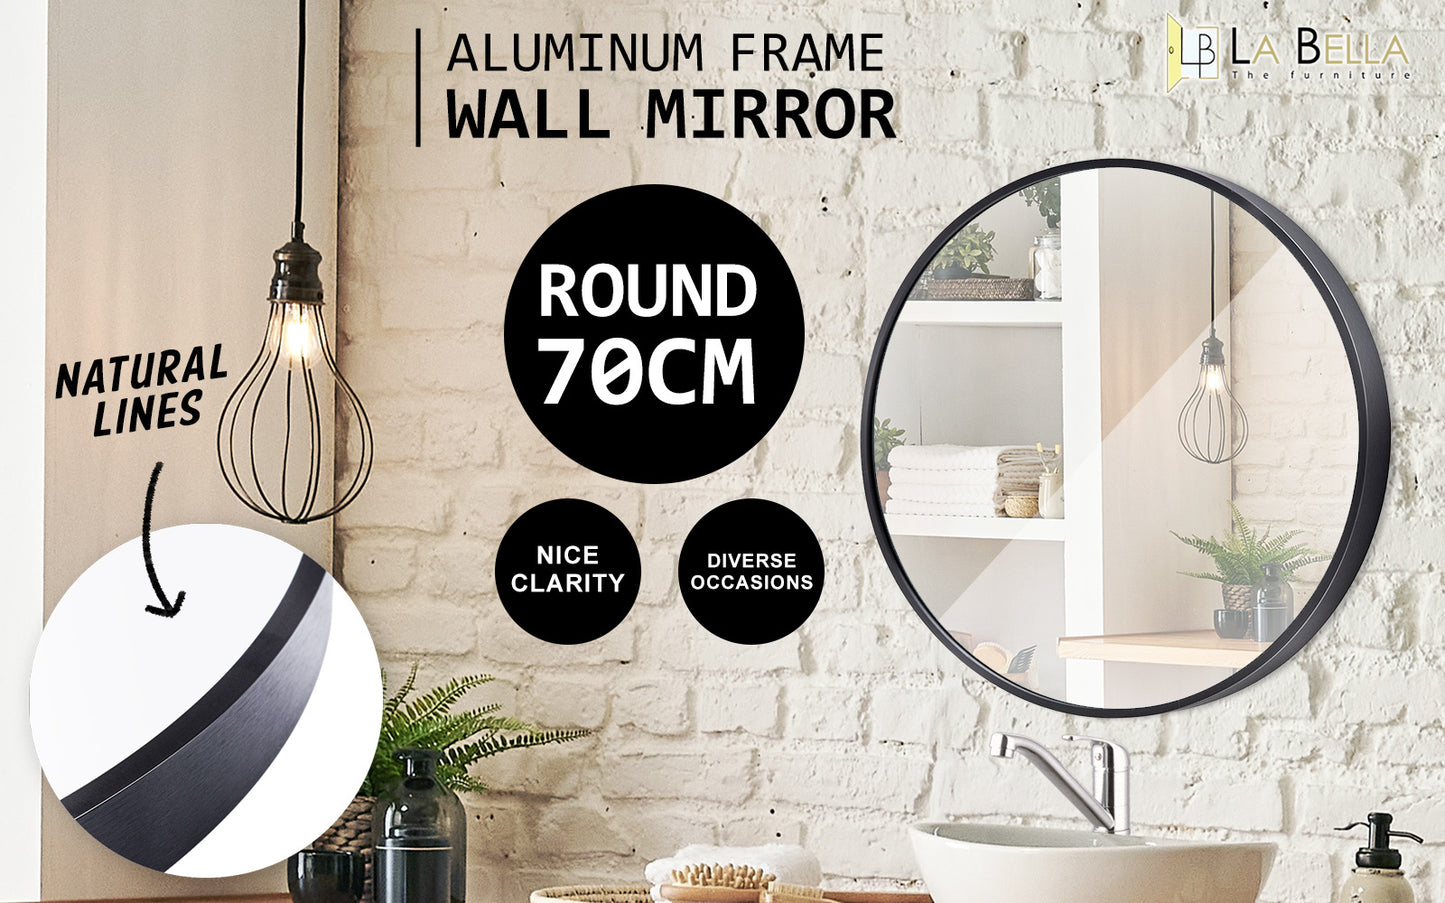 Black Wall Mirror Round Aluminum Frame Makeup Decor Bathroom Vanity 70cm - image2